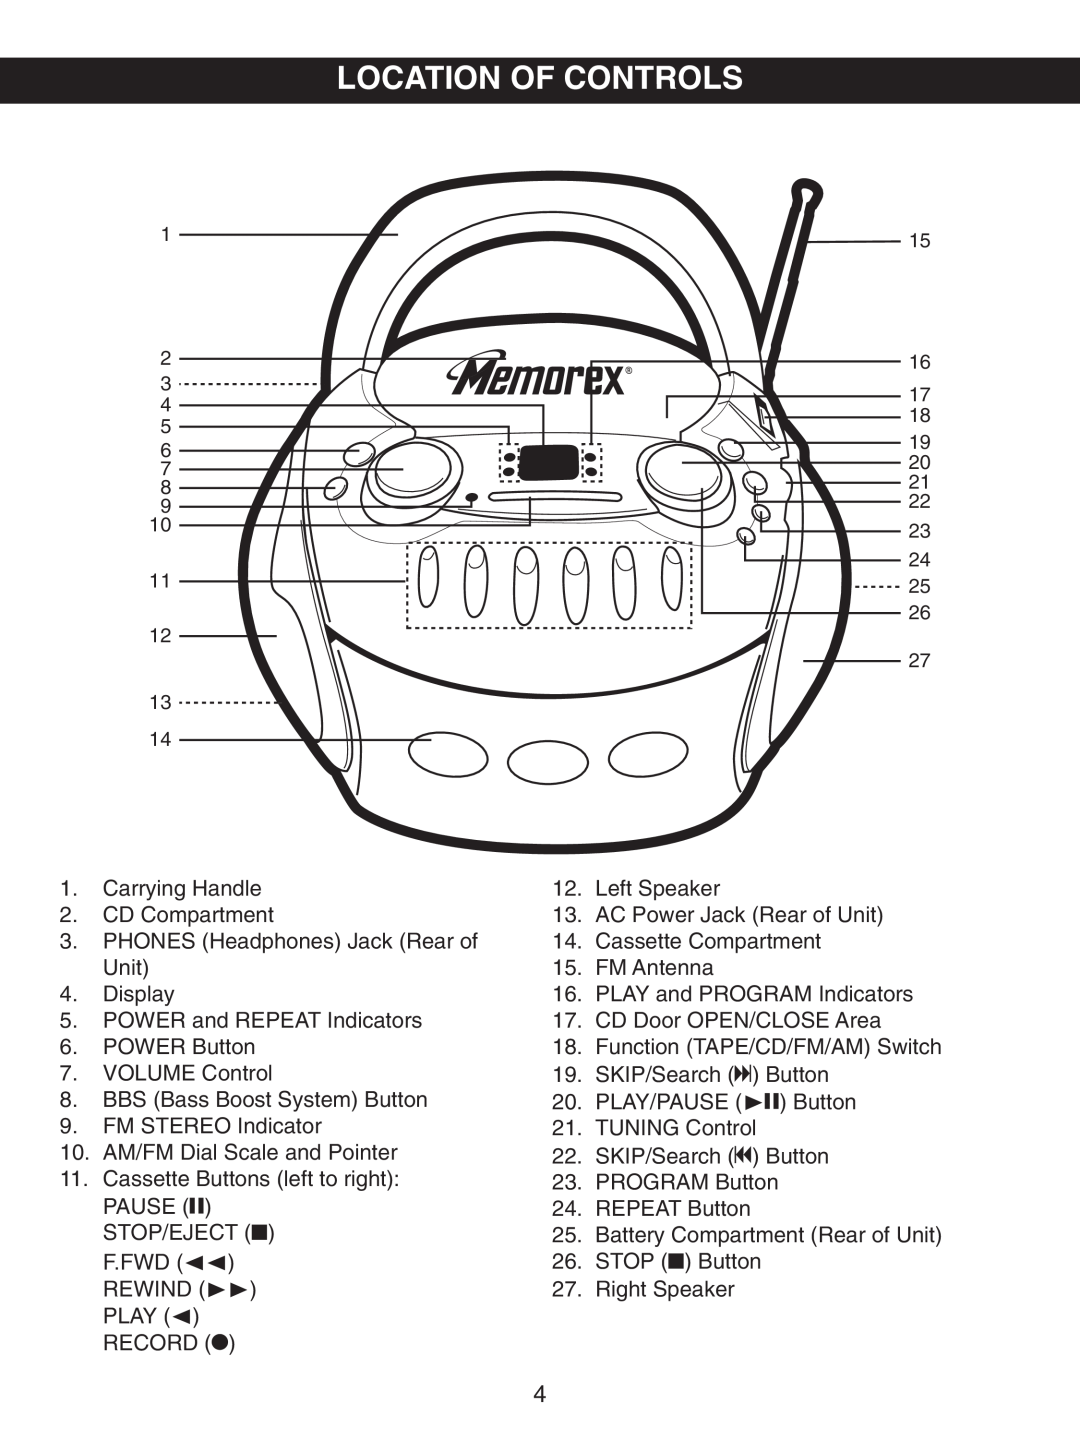 Memorex MP3227 manual Location Of Controls 